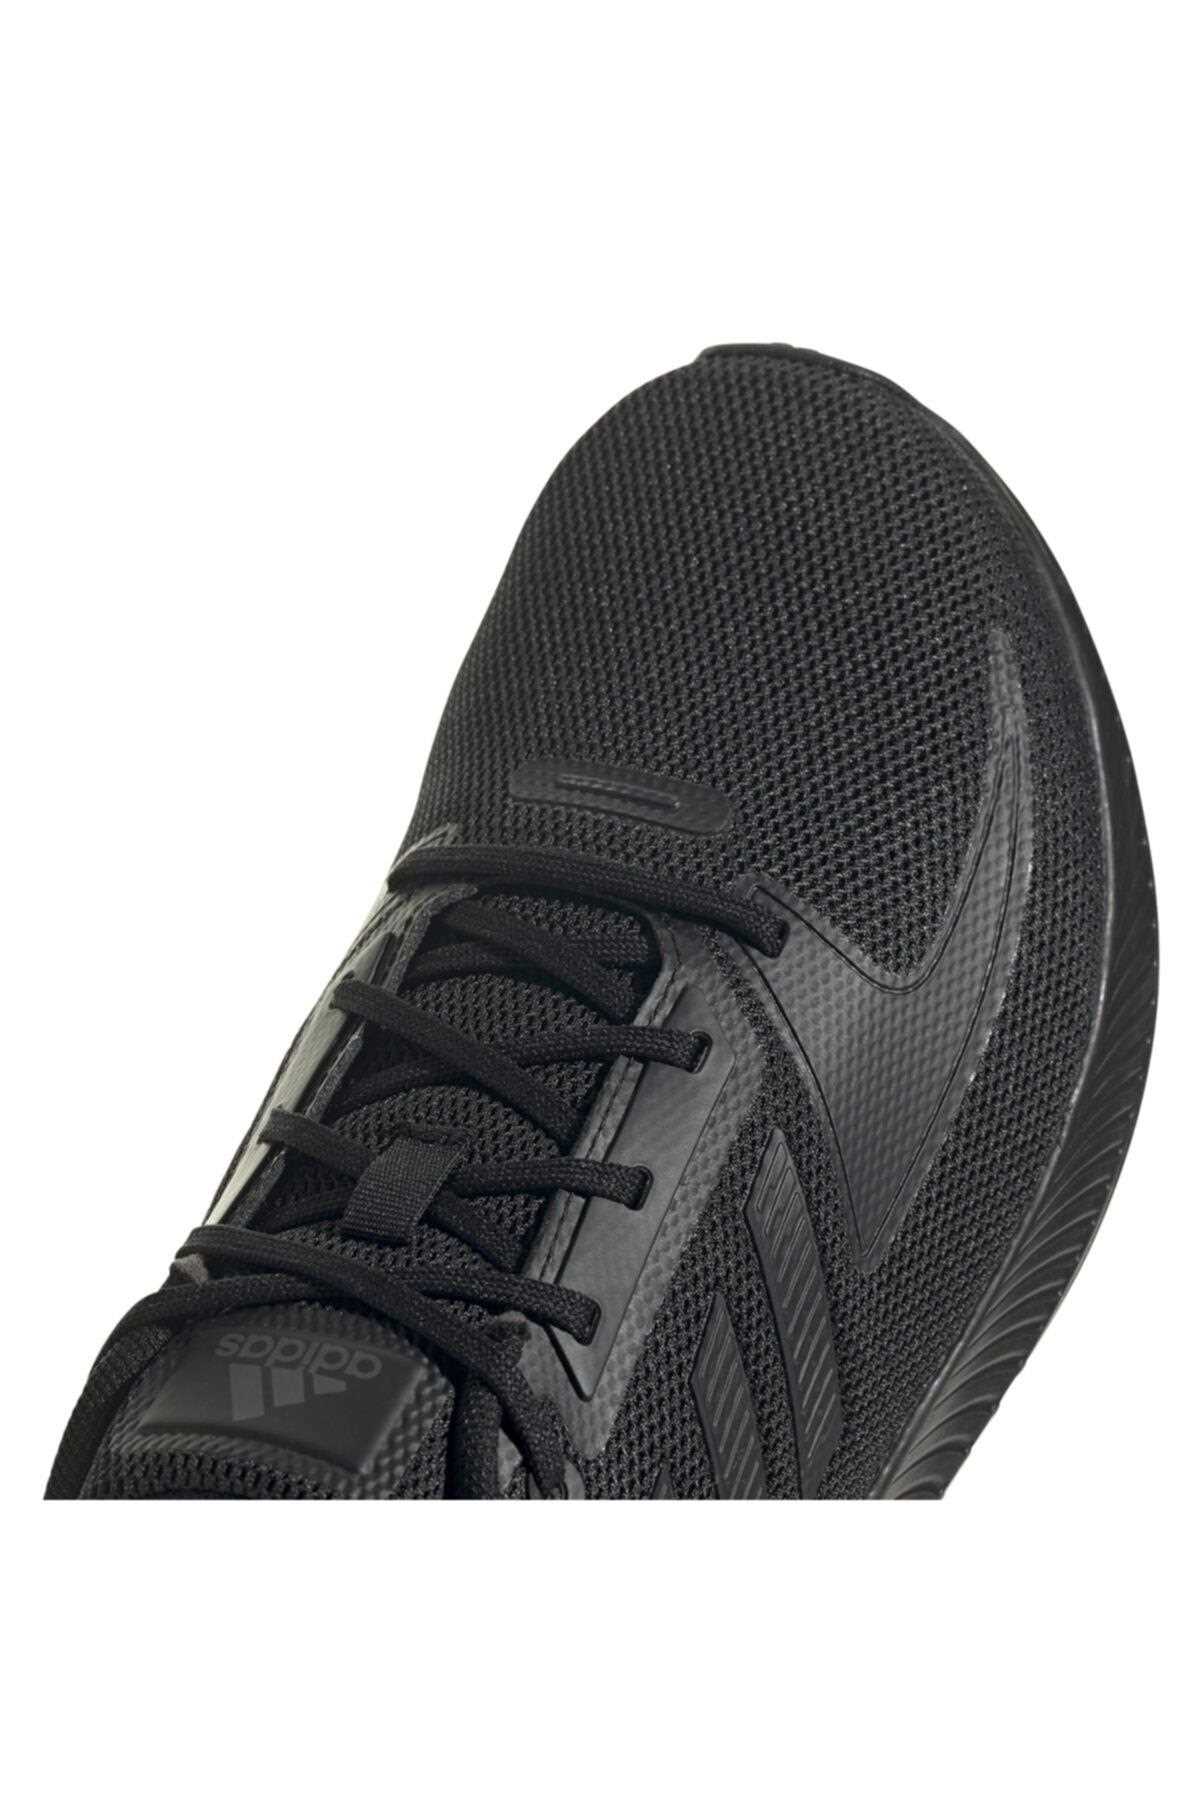 خرید کفش مخصوص دویدن اورجینال مردانه شیک ادیداس رنگ مشکی کد ty144702008